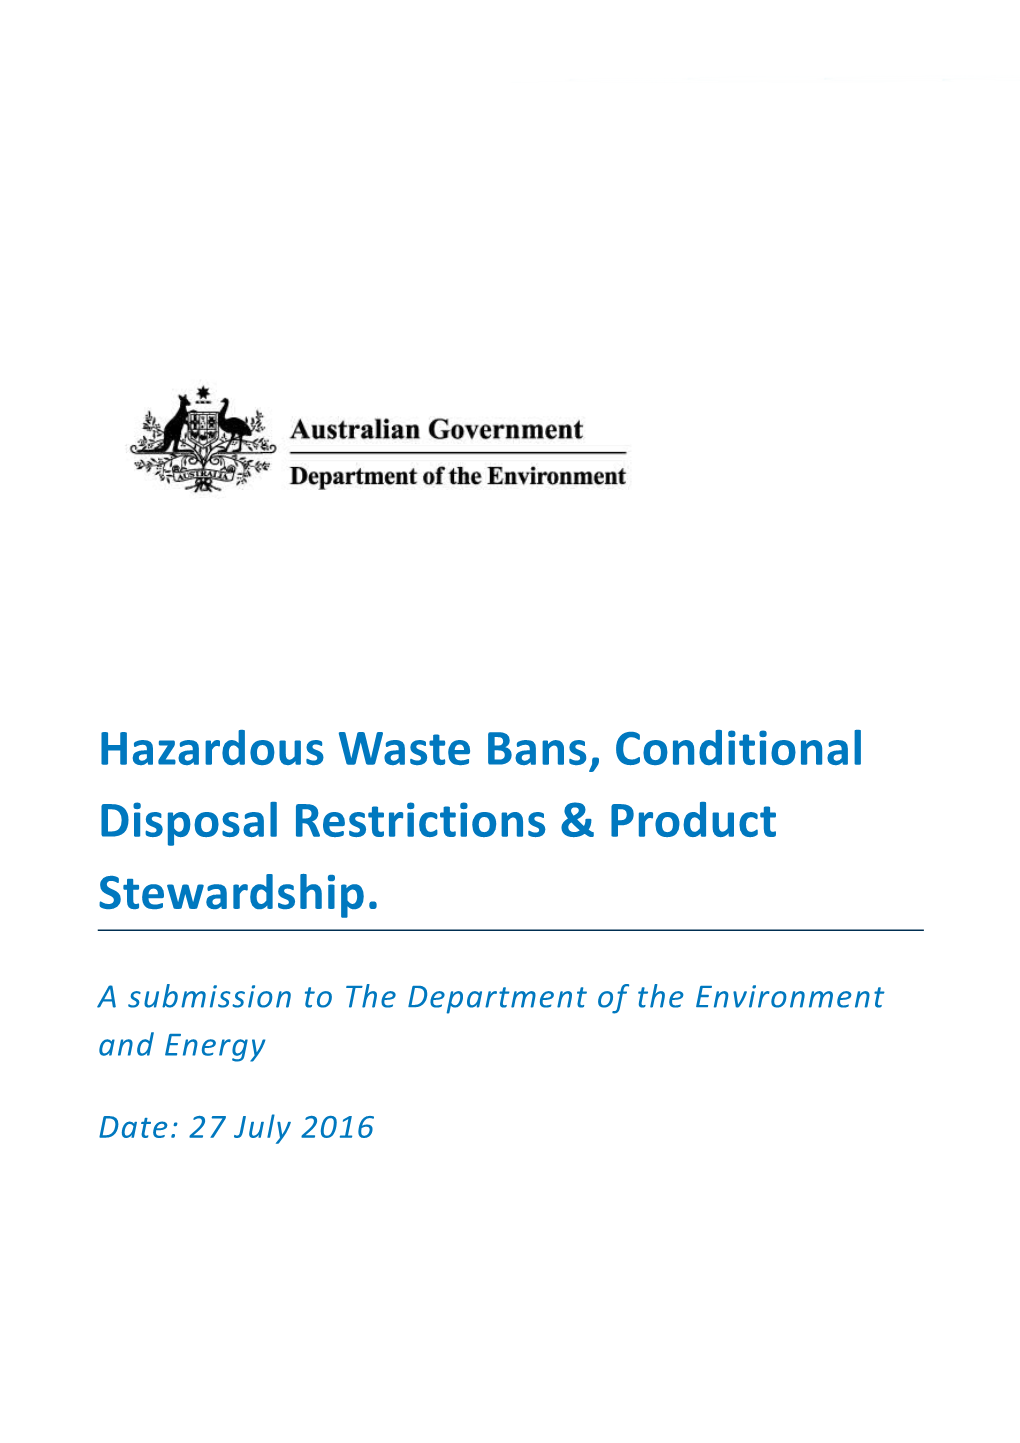 Hazardous Waste Bans, Conditional Disposal Restrictions & Product Stewardship